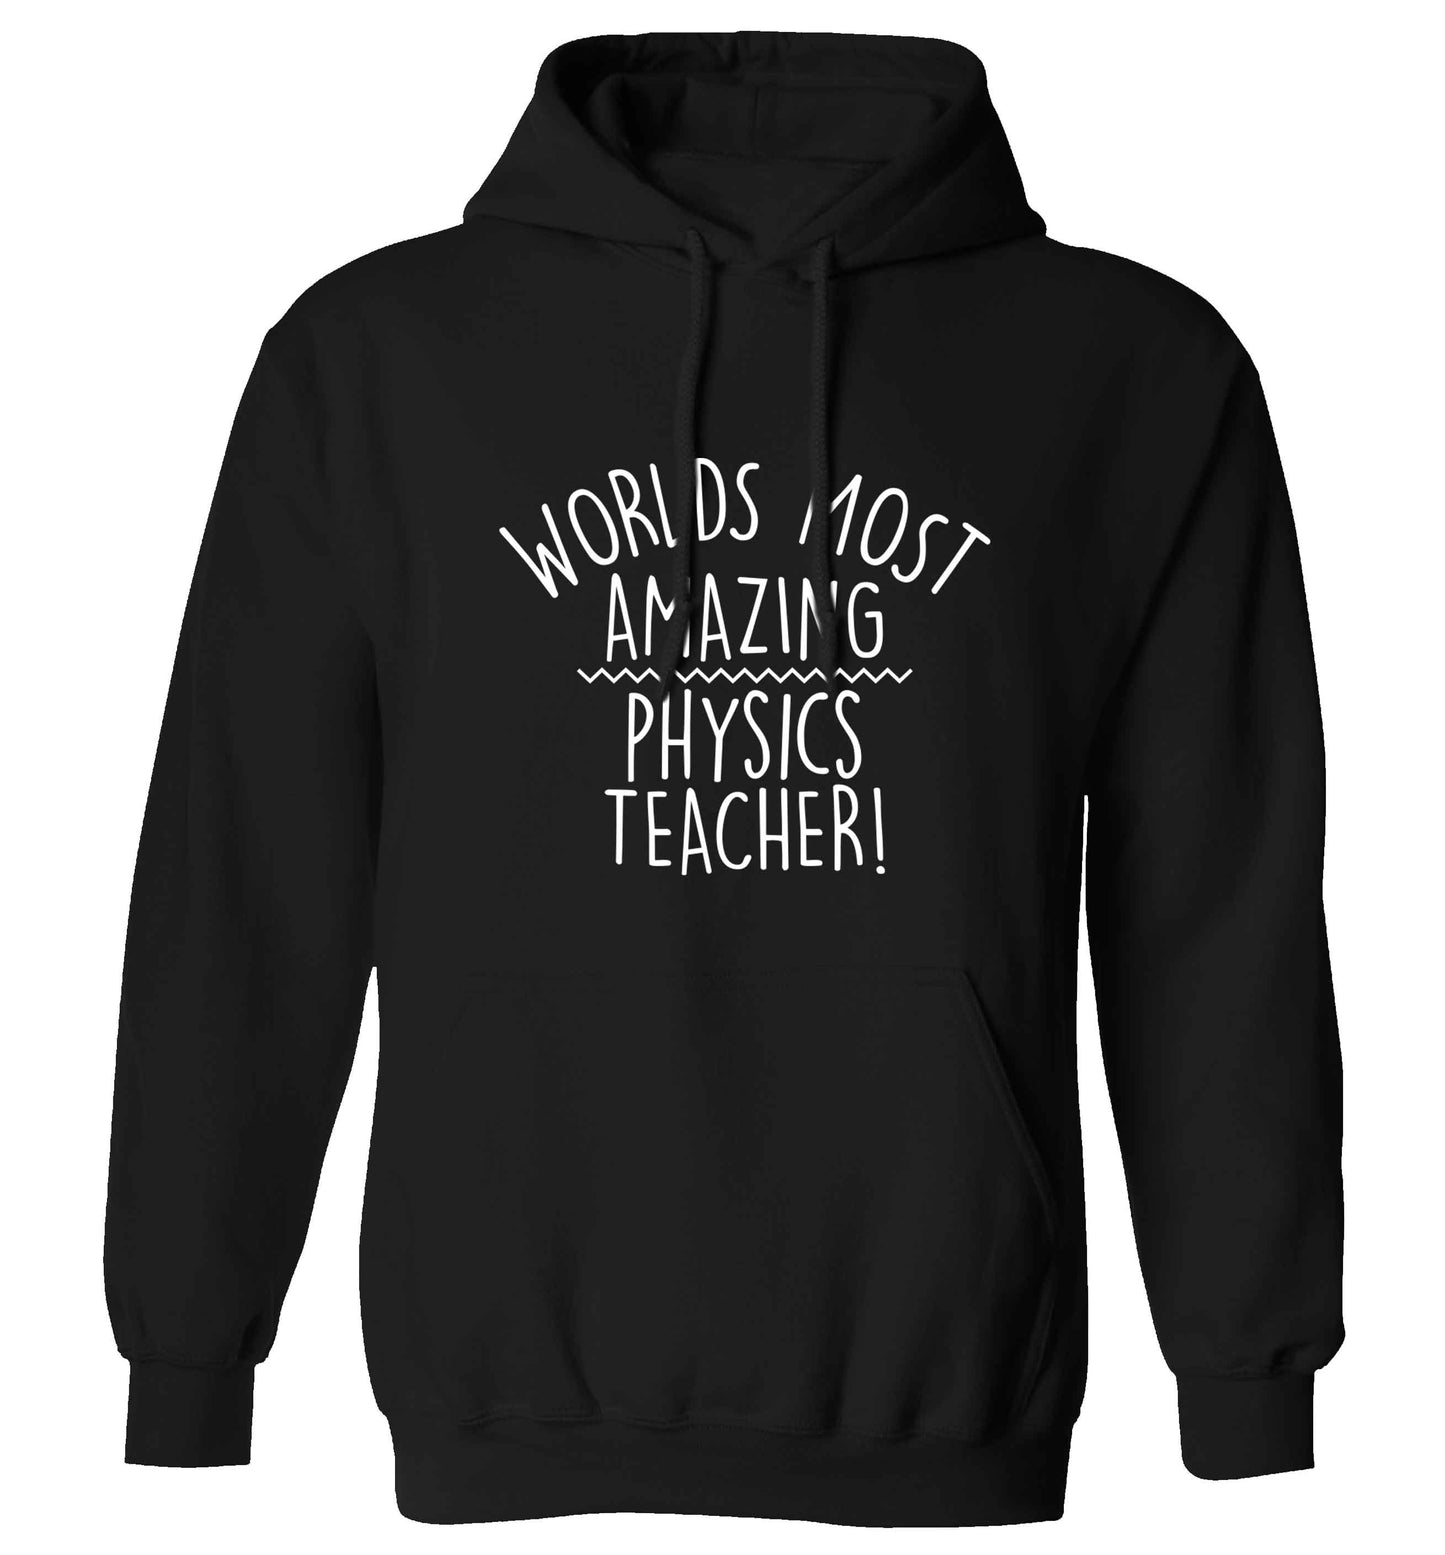 Worlds most amazing physics teacher adults unisex black hoodie 2XL